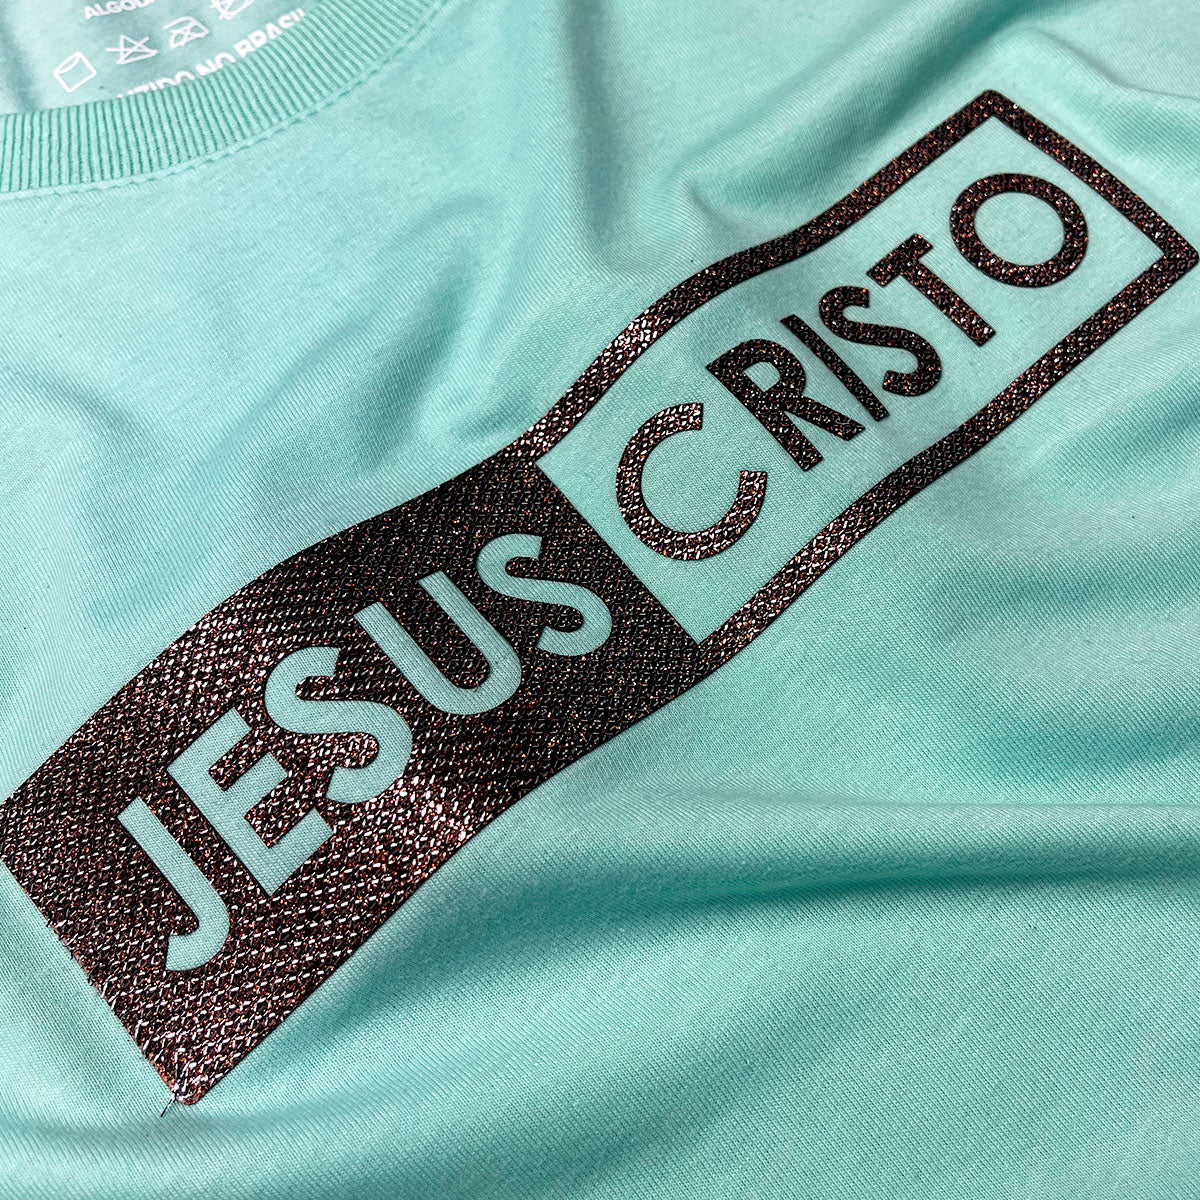 Camiseta Feminina Verde Menta Jesus Cristo Glitter